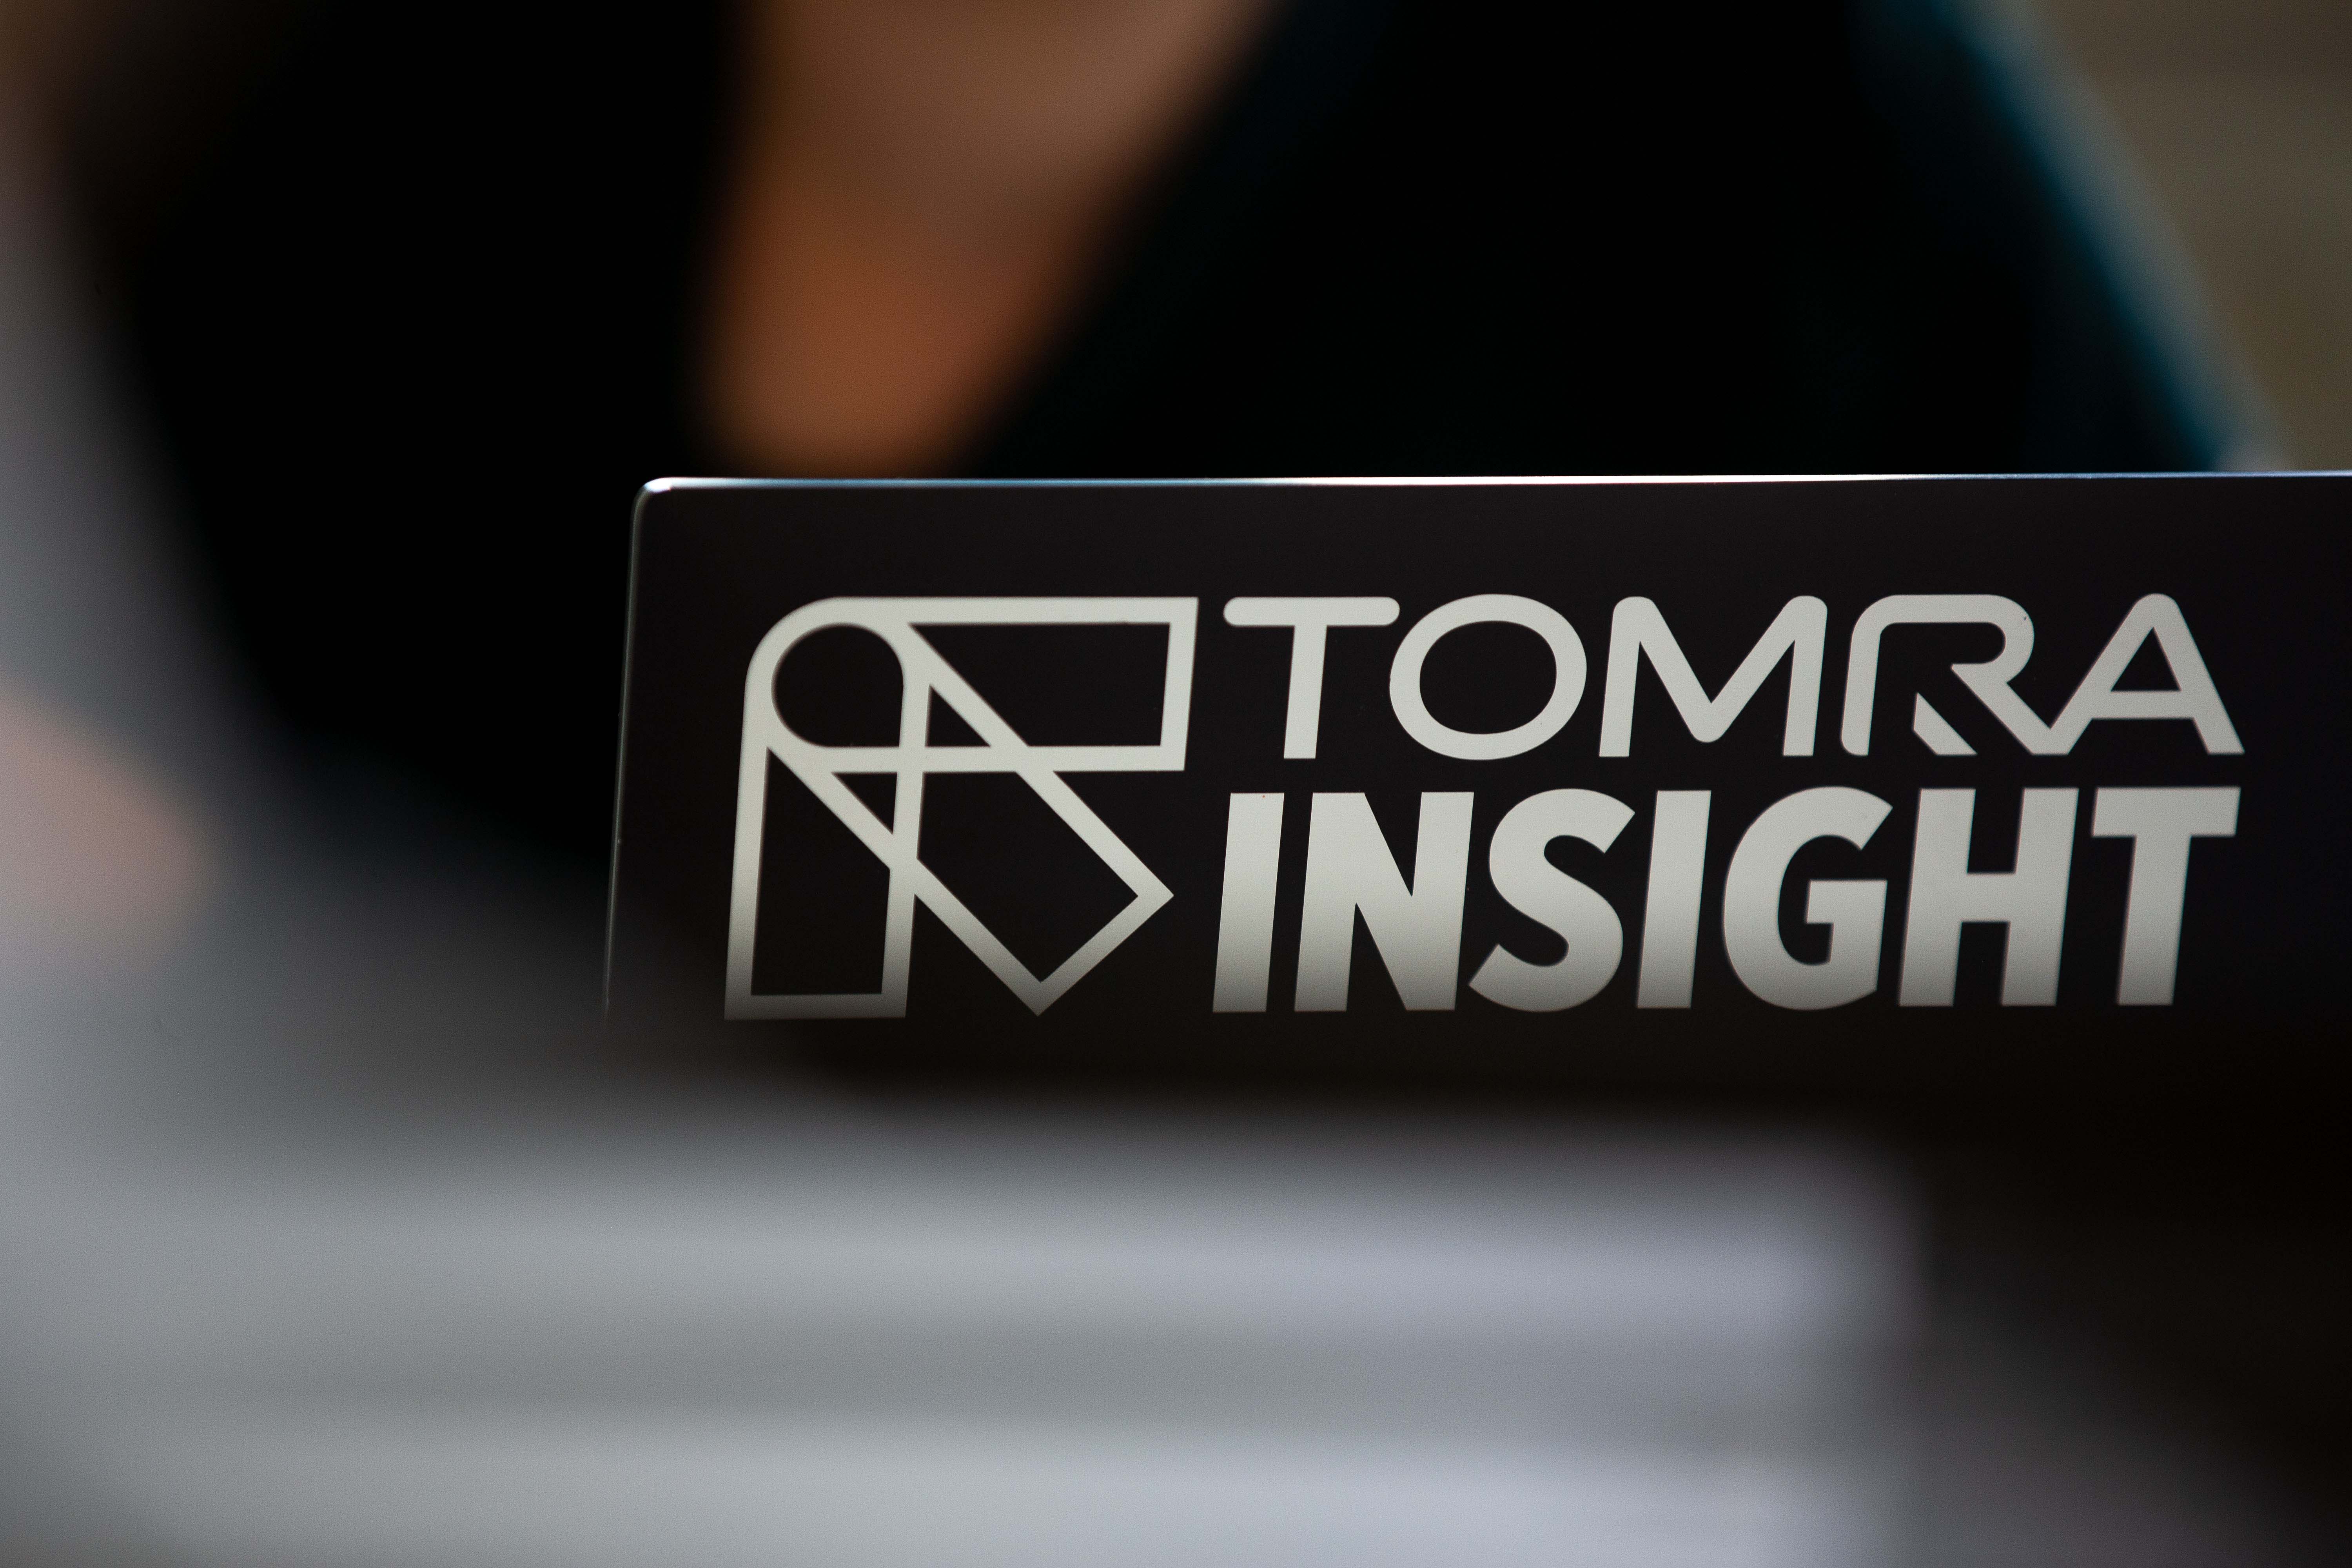 TOMRA insight logo